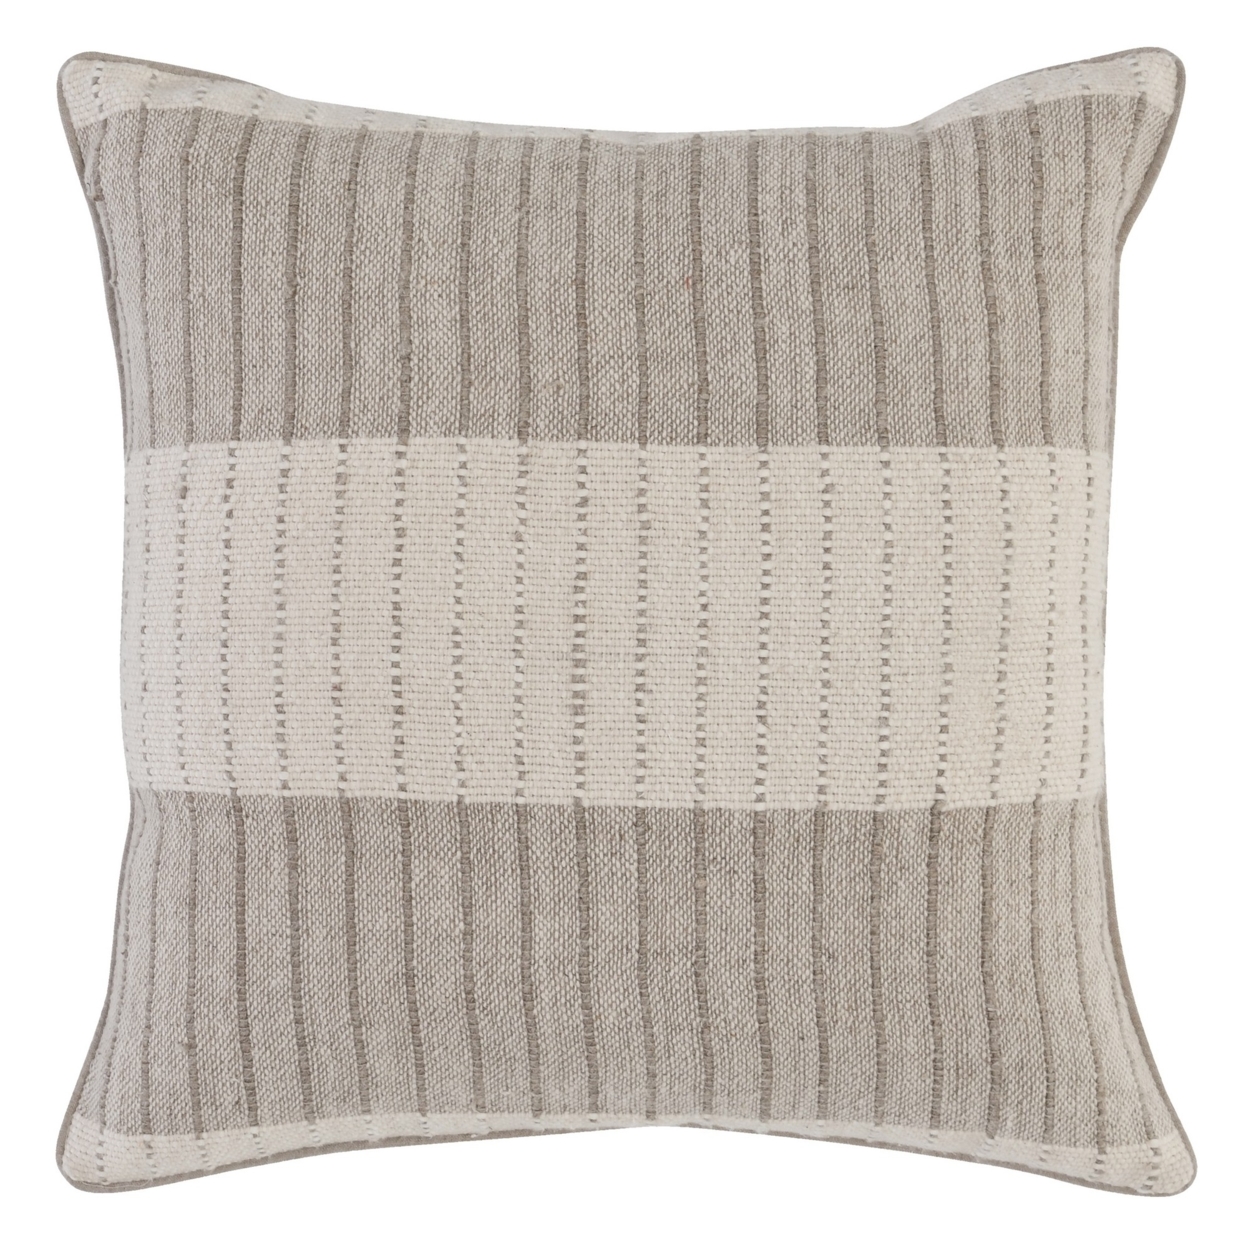 22 X 22 Soft Fabric Accent Throw Pillow, Woven Striped Design, Brown Beige- Saltoro Sherpi